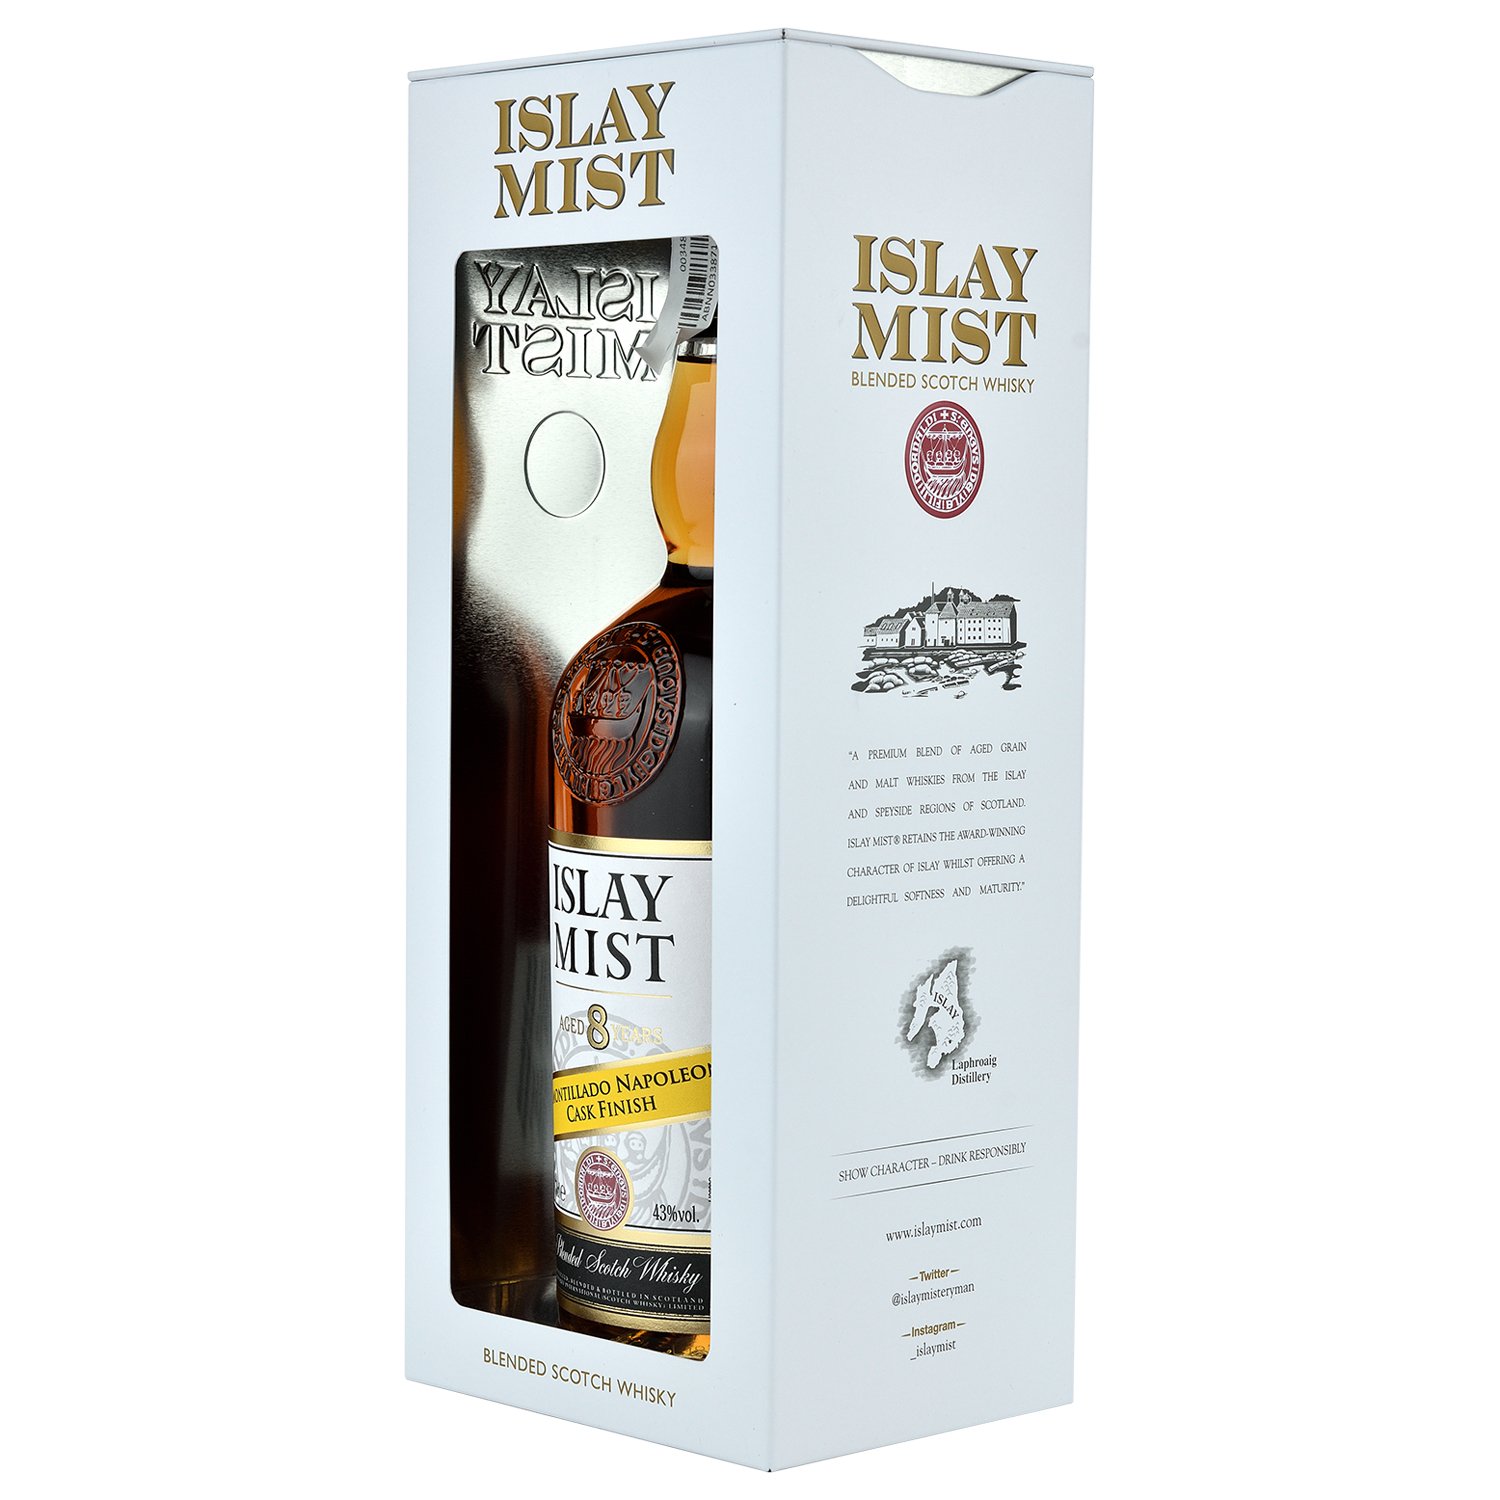 Віскі Islay Mist Amontillado Napoleon Cask Finish Blended Scotch Whisky 8 yo, 43%, 0,7 л - фото 2